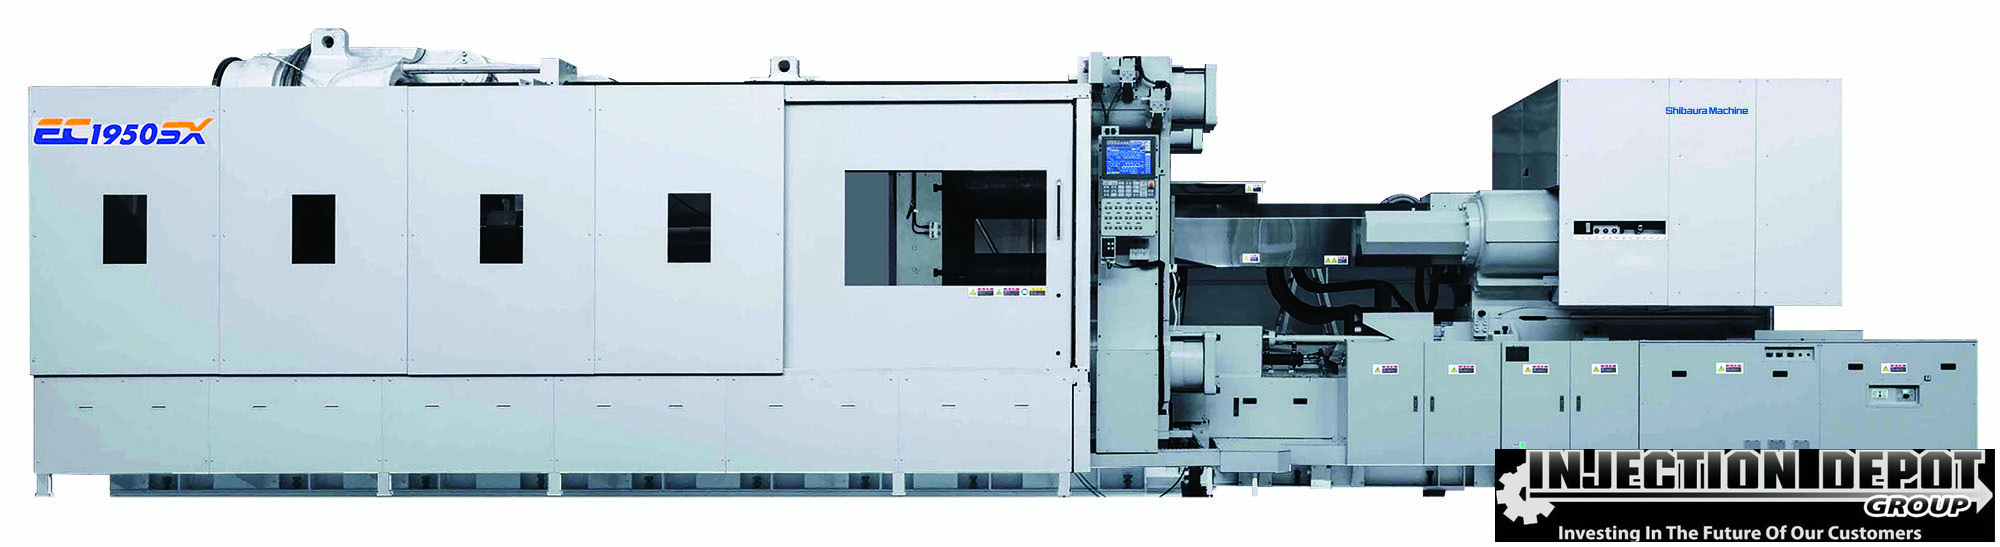 SHIBAURA MACHINE EC1950SXIIIV70-i155 A Horizontal Injection Moulding Machines | INJECTION DEPOT GROUP